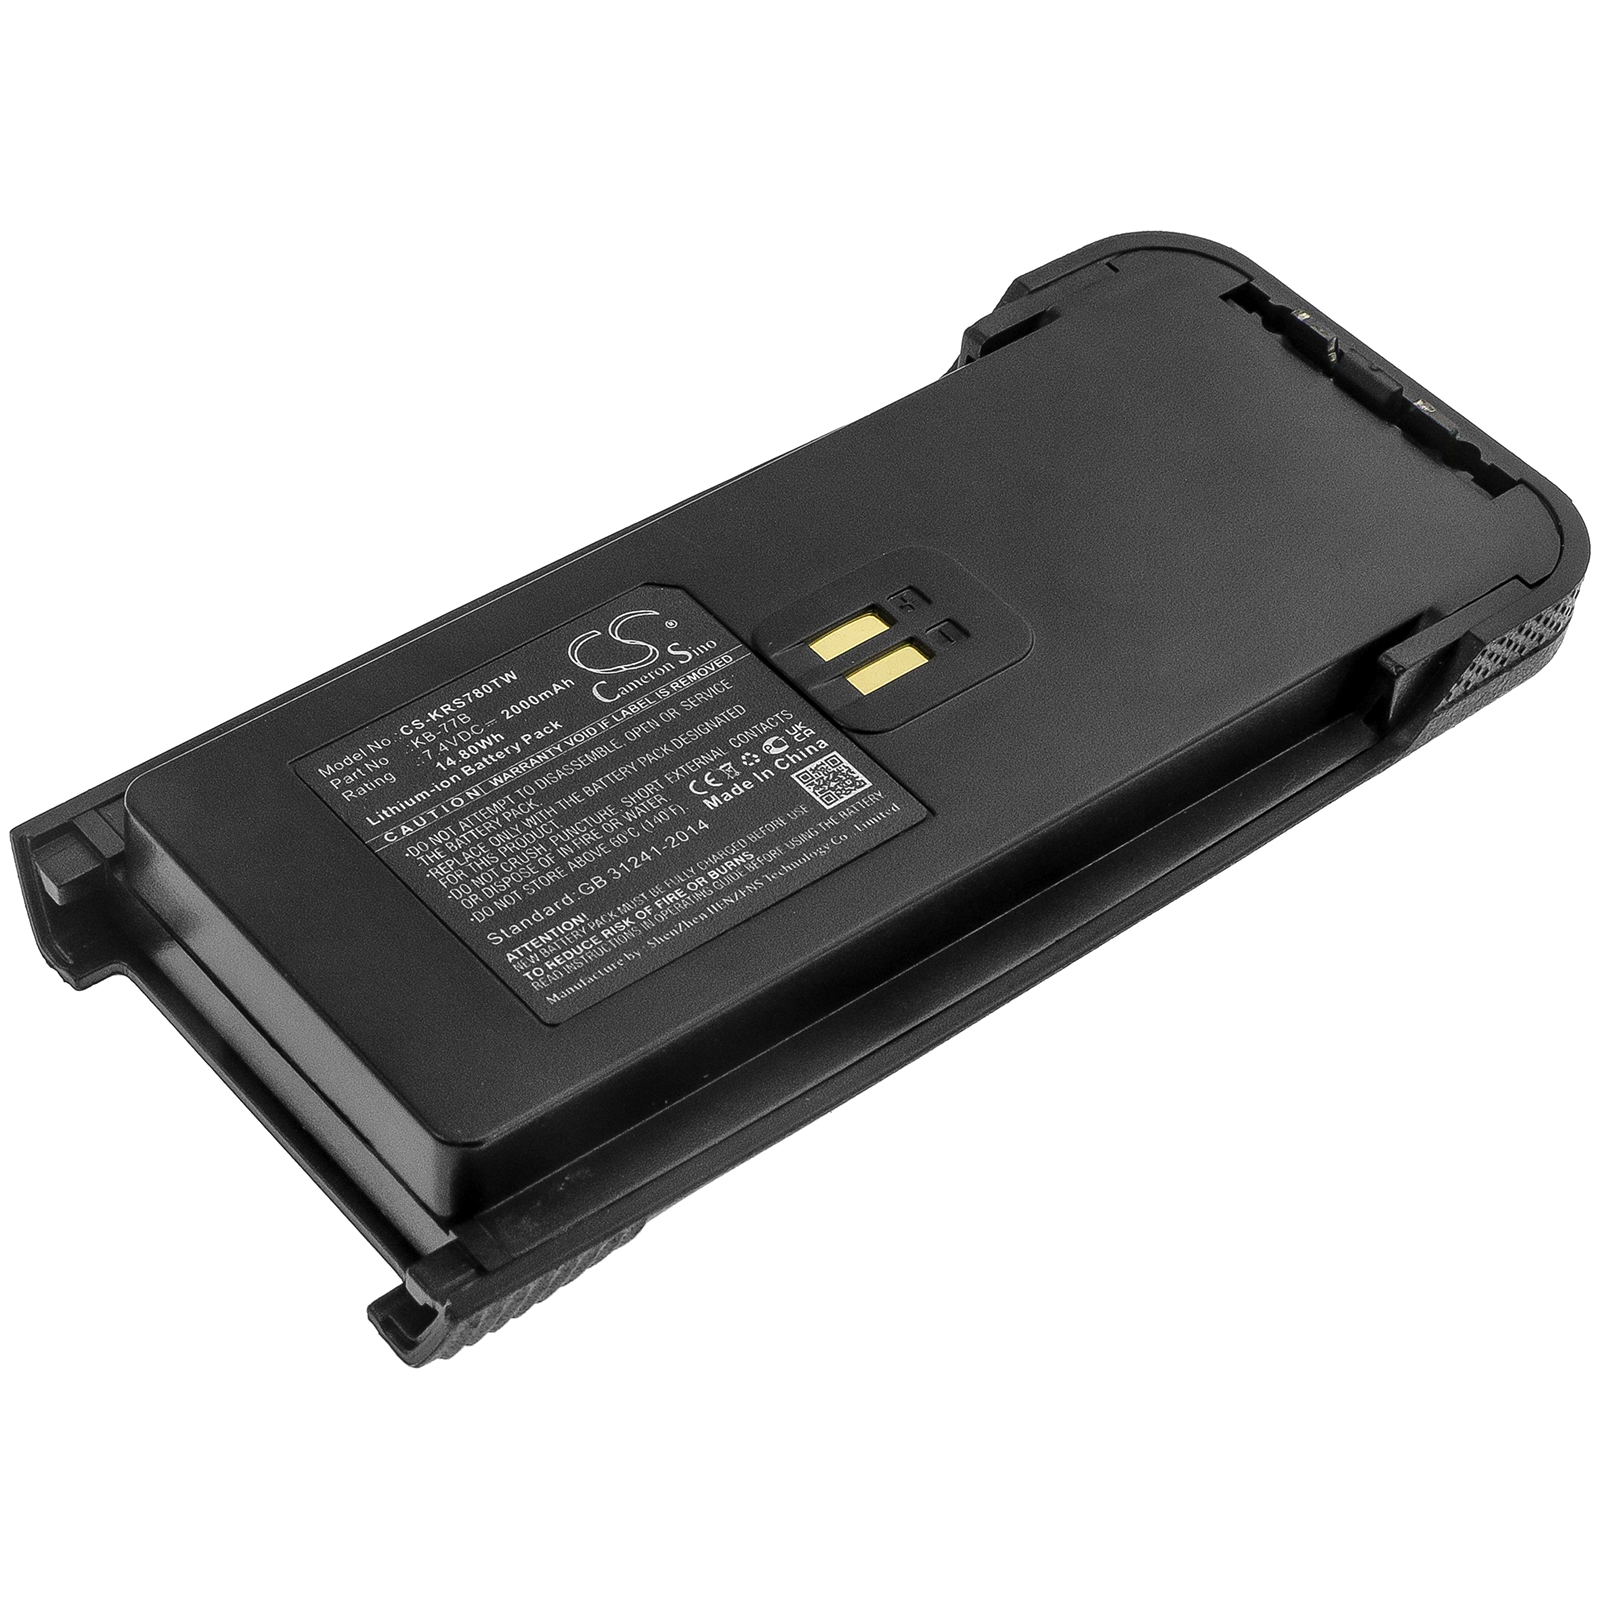 Kirisun DP770 Compatible Replacement Battery